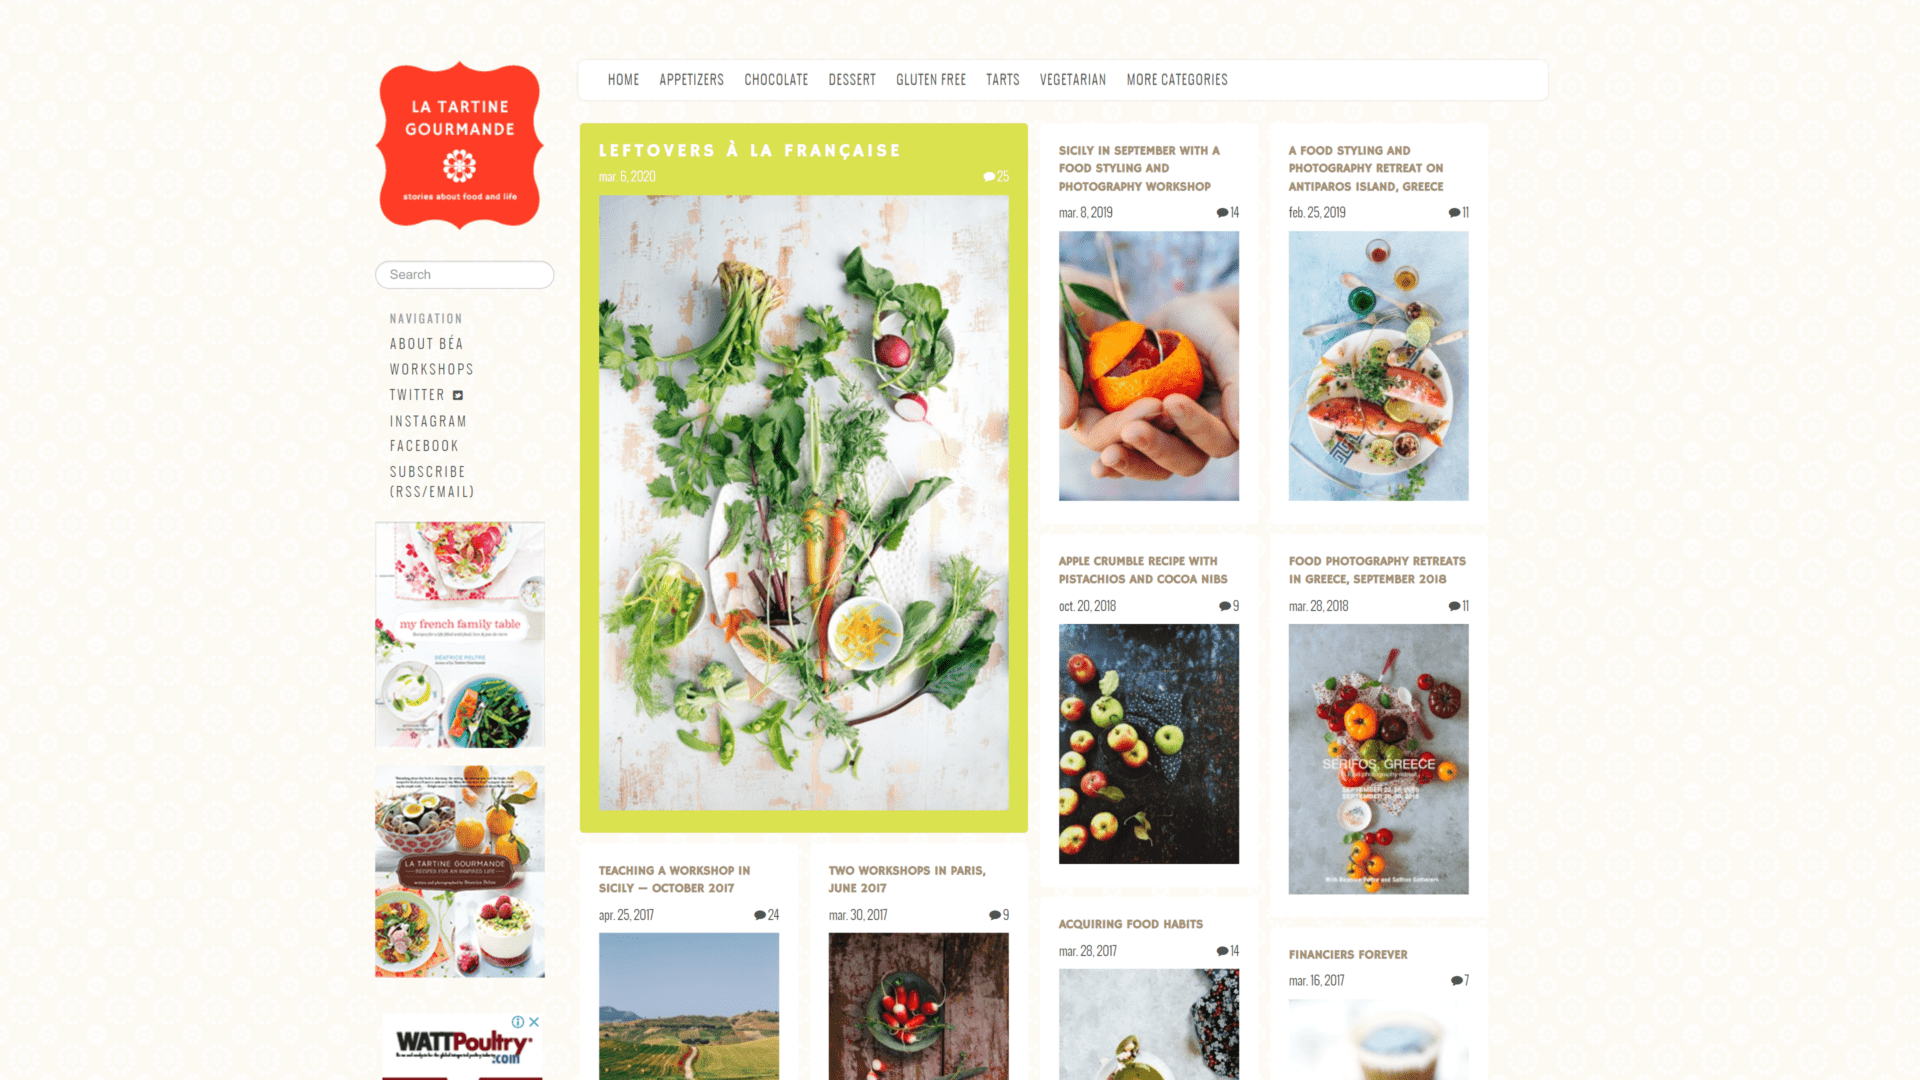 A screenshot pf the 
la tartine gourmande homepage